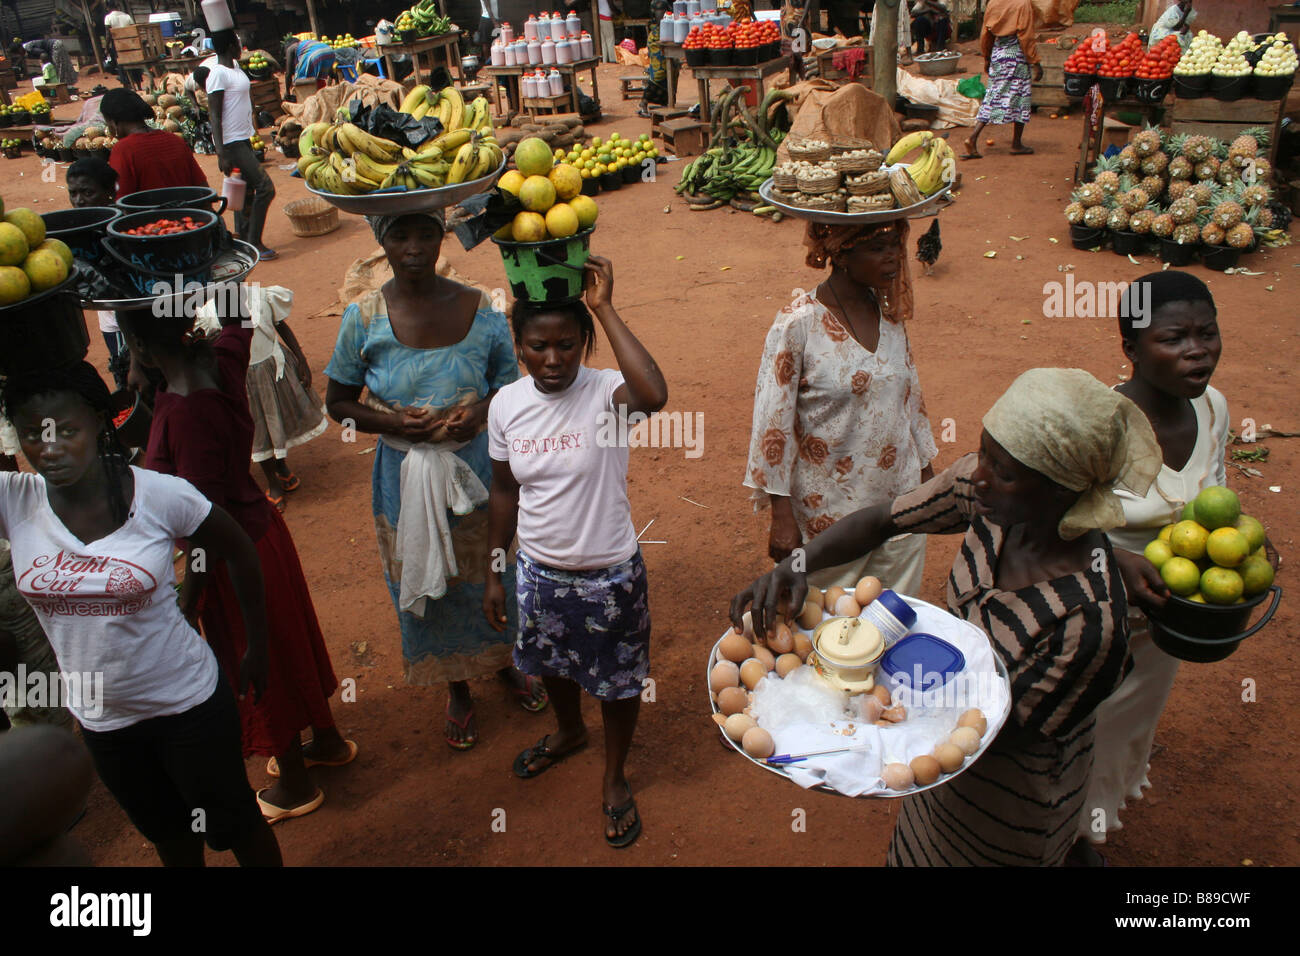 Street food market Africa Stock Photo